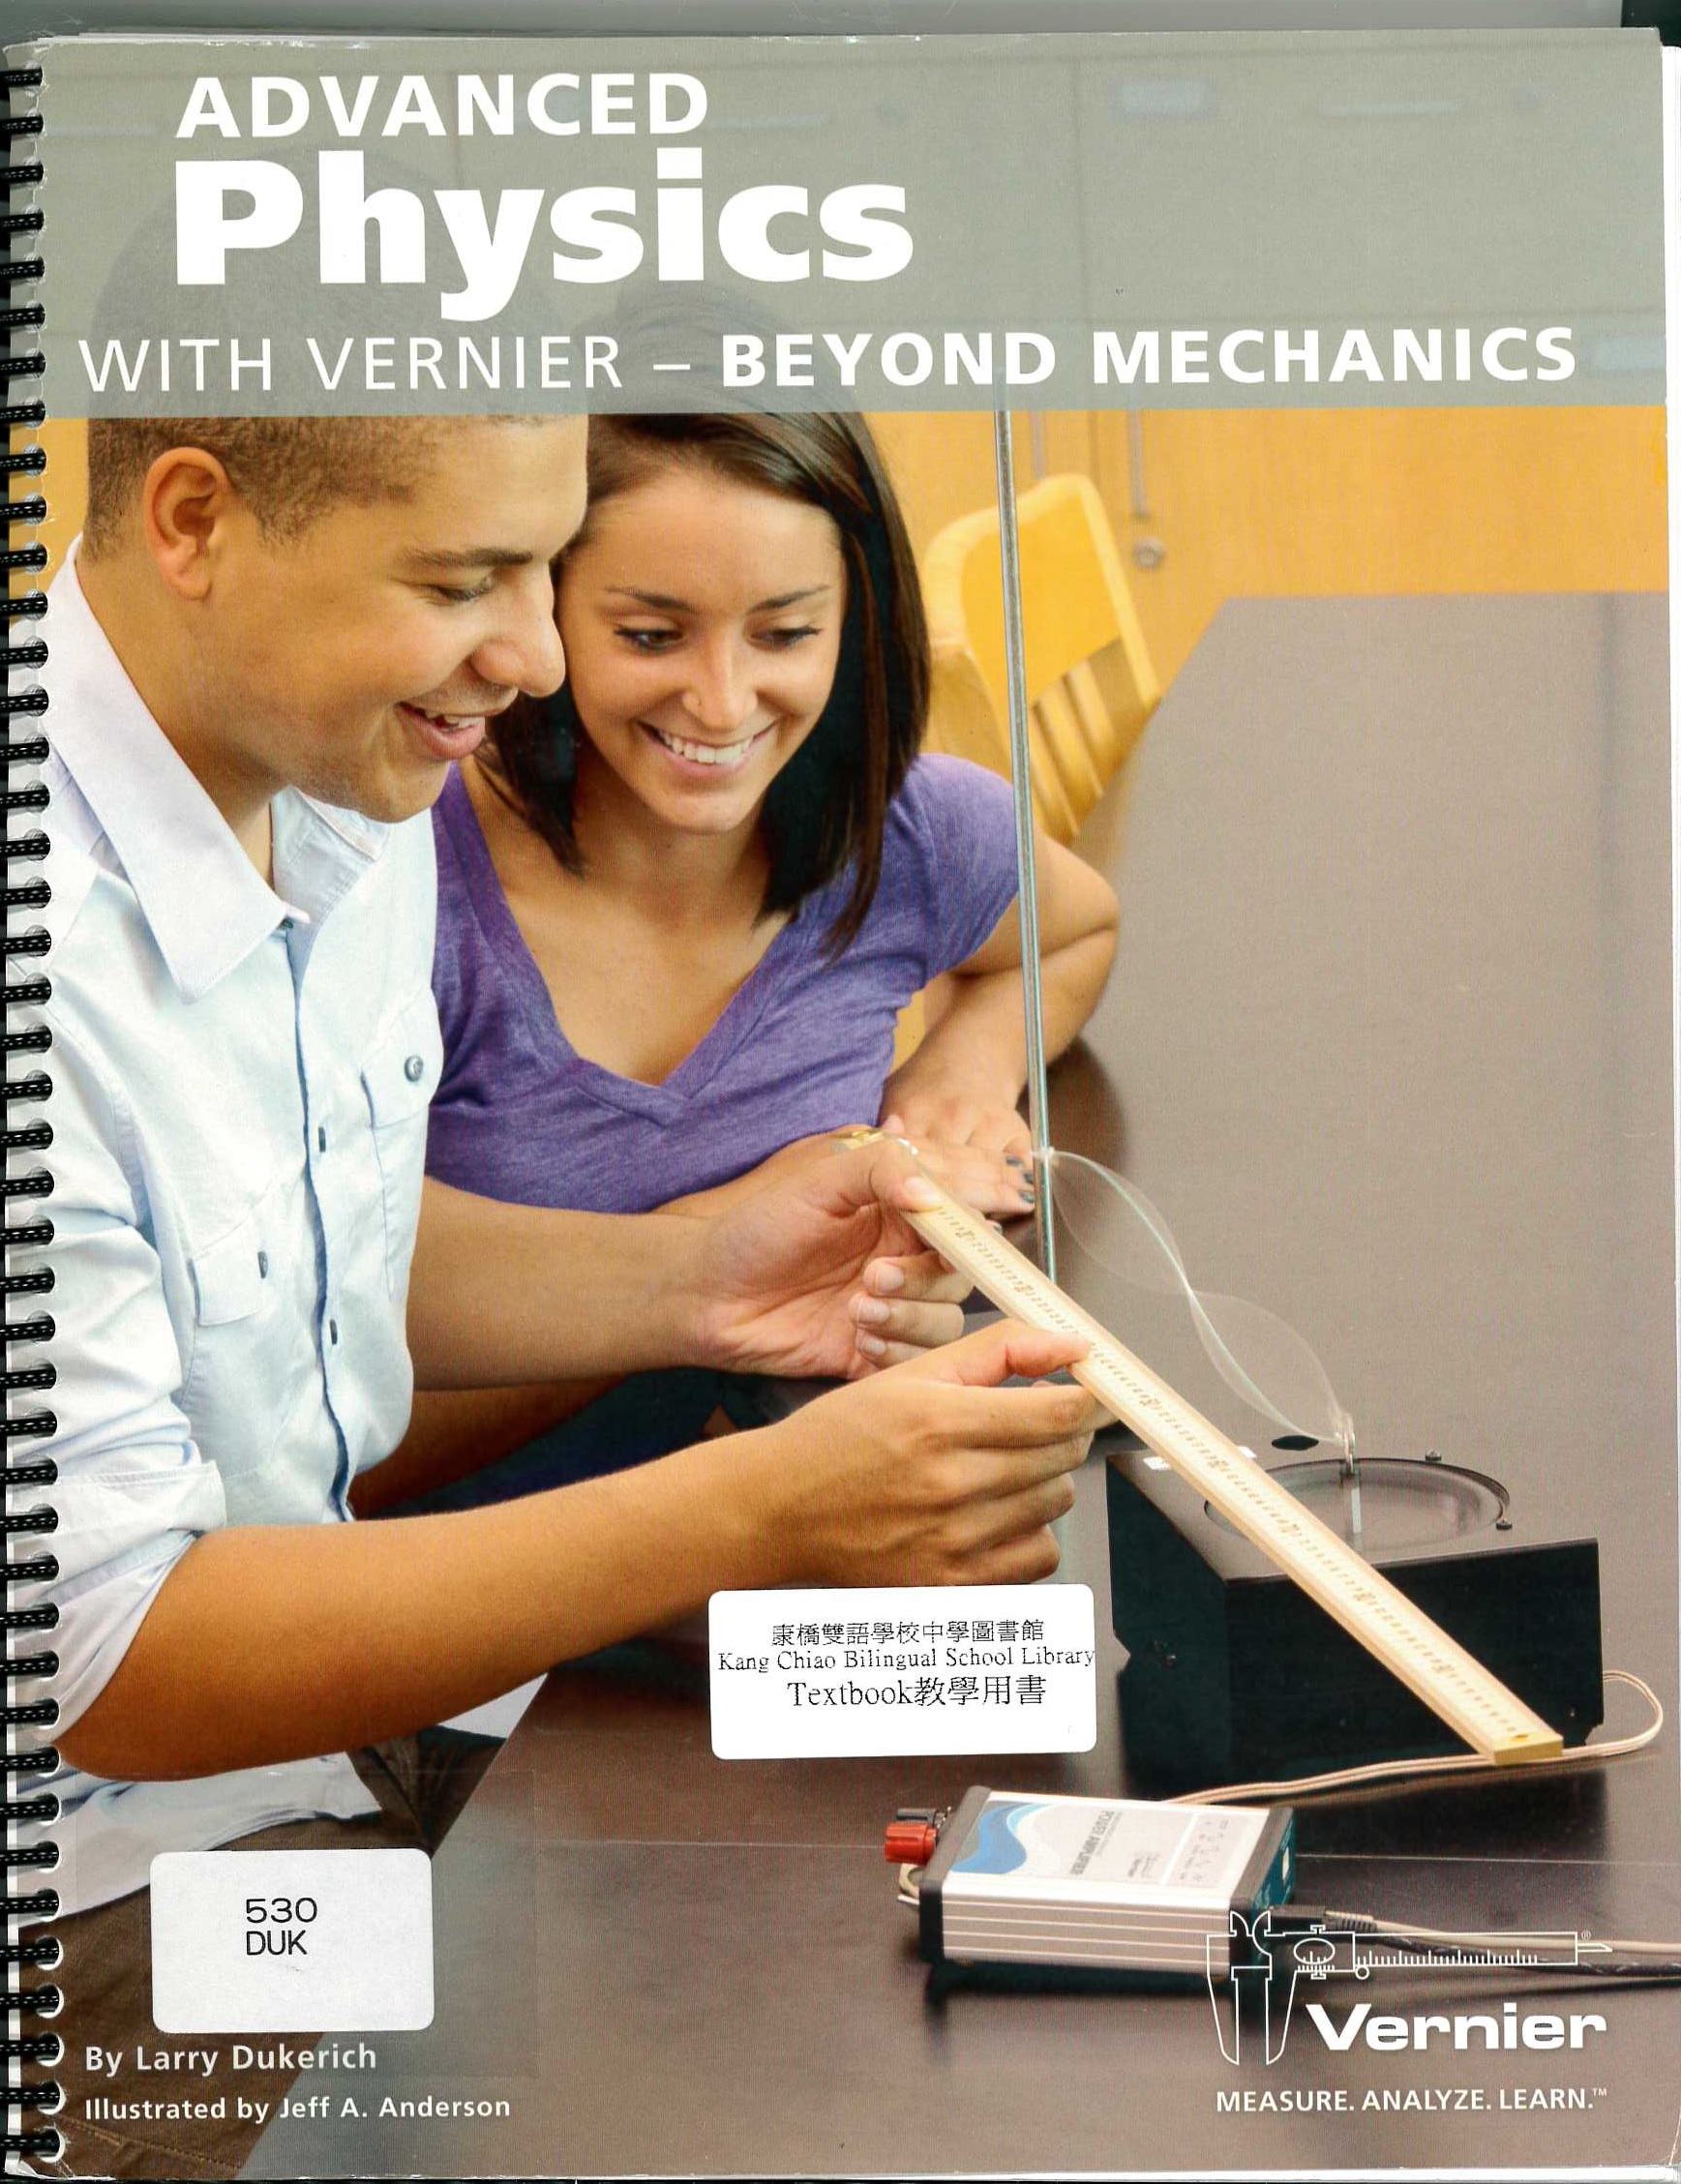 Advanced physics with vernier-beyond mechanics